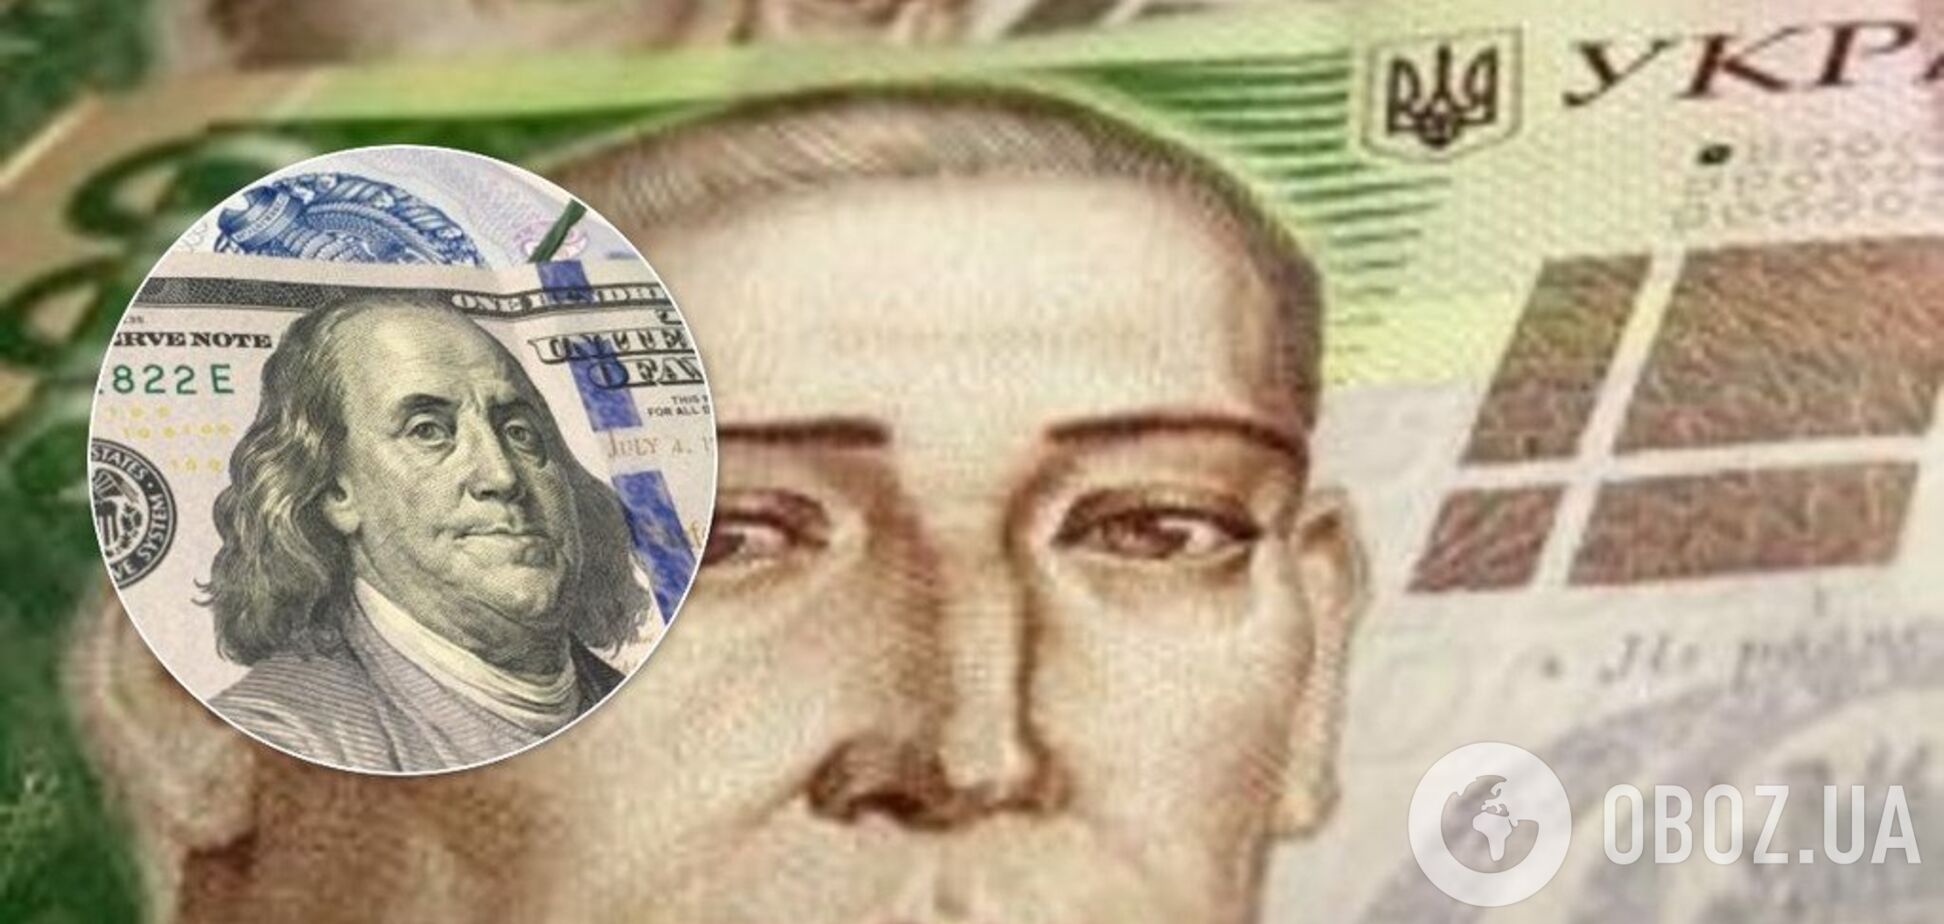 Курс доллара в Украине упал до рекордной отметки